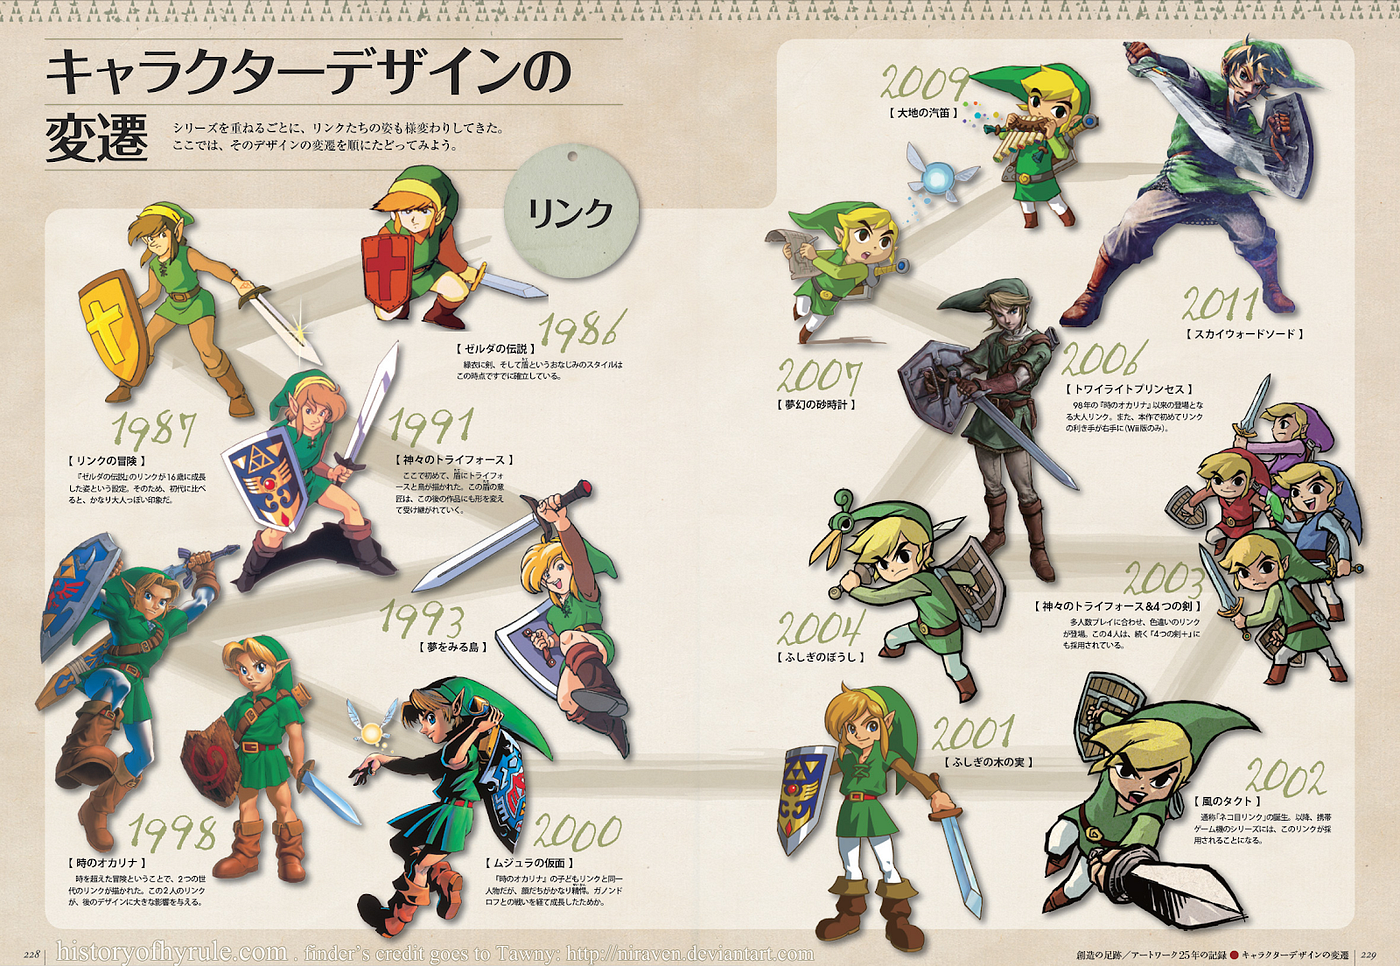 Legend Of Zelda Ocarina of Time Link Figure Nintendo Power 2002